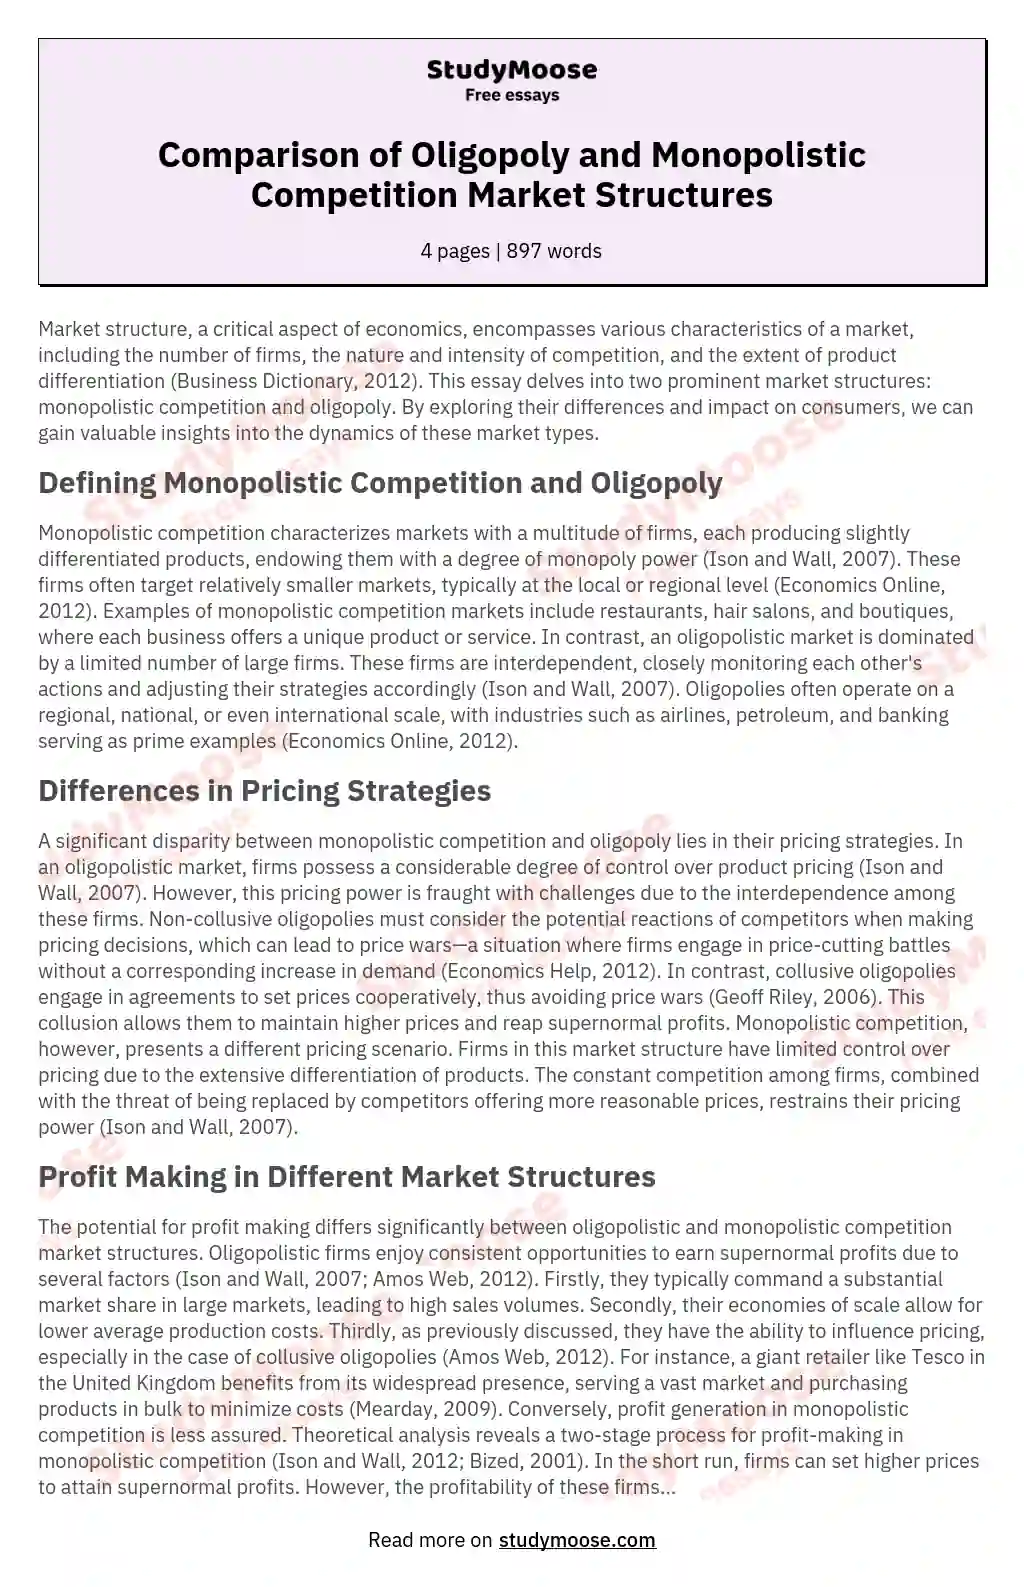 Comparison of Oligopoly and Monopolistic Competition Market Structures essay